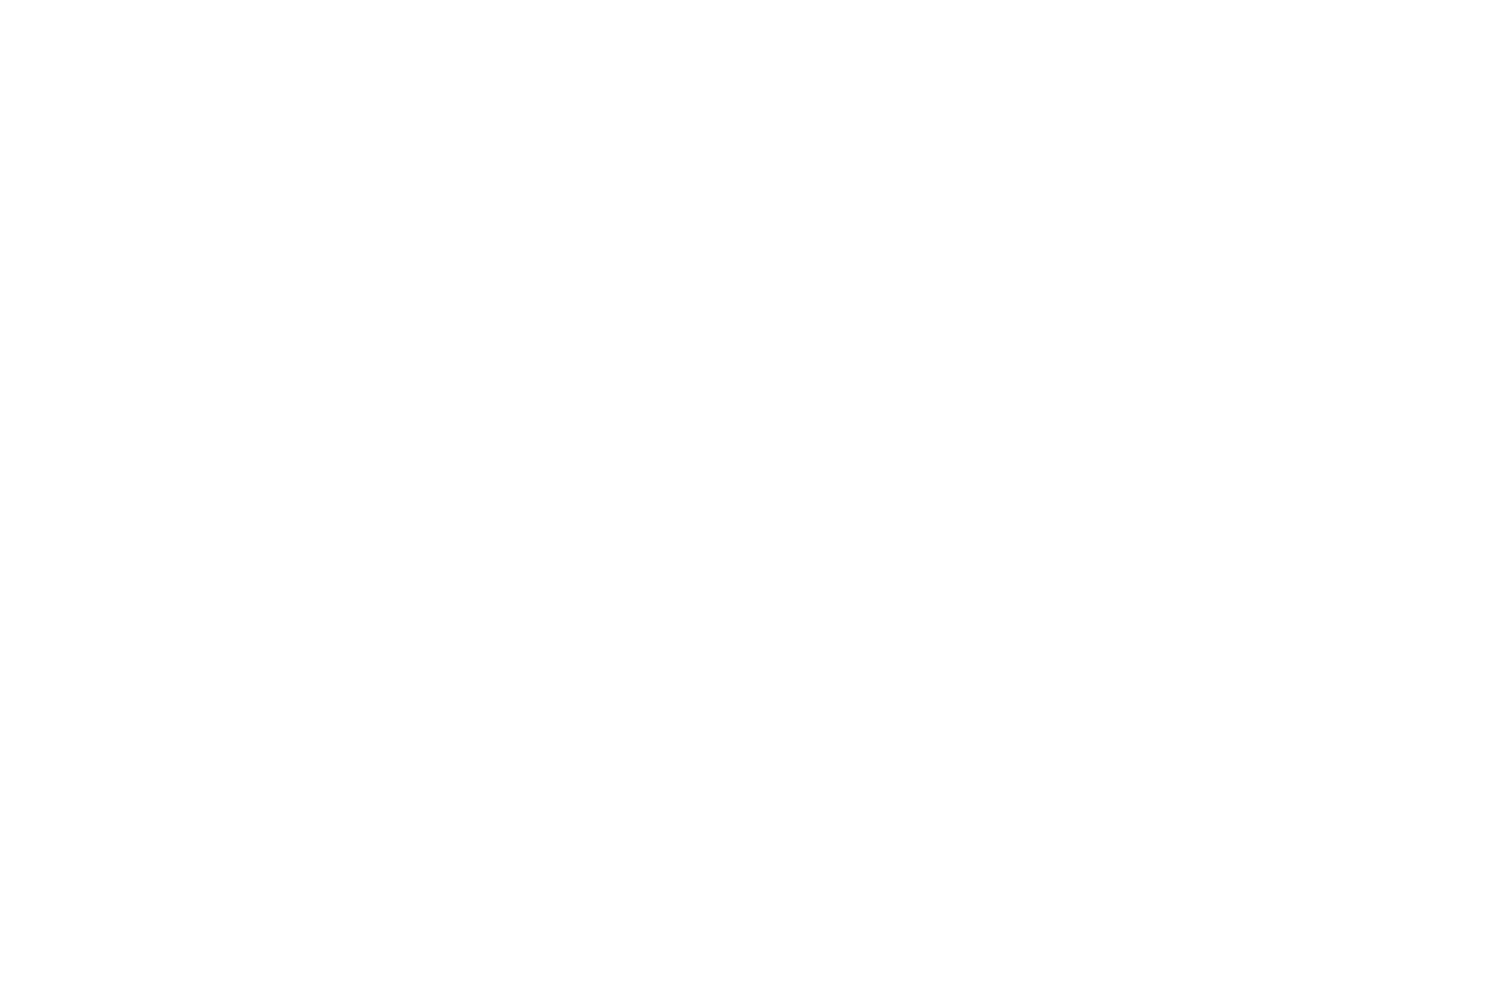 Michael Hansard Photography